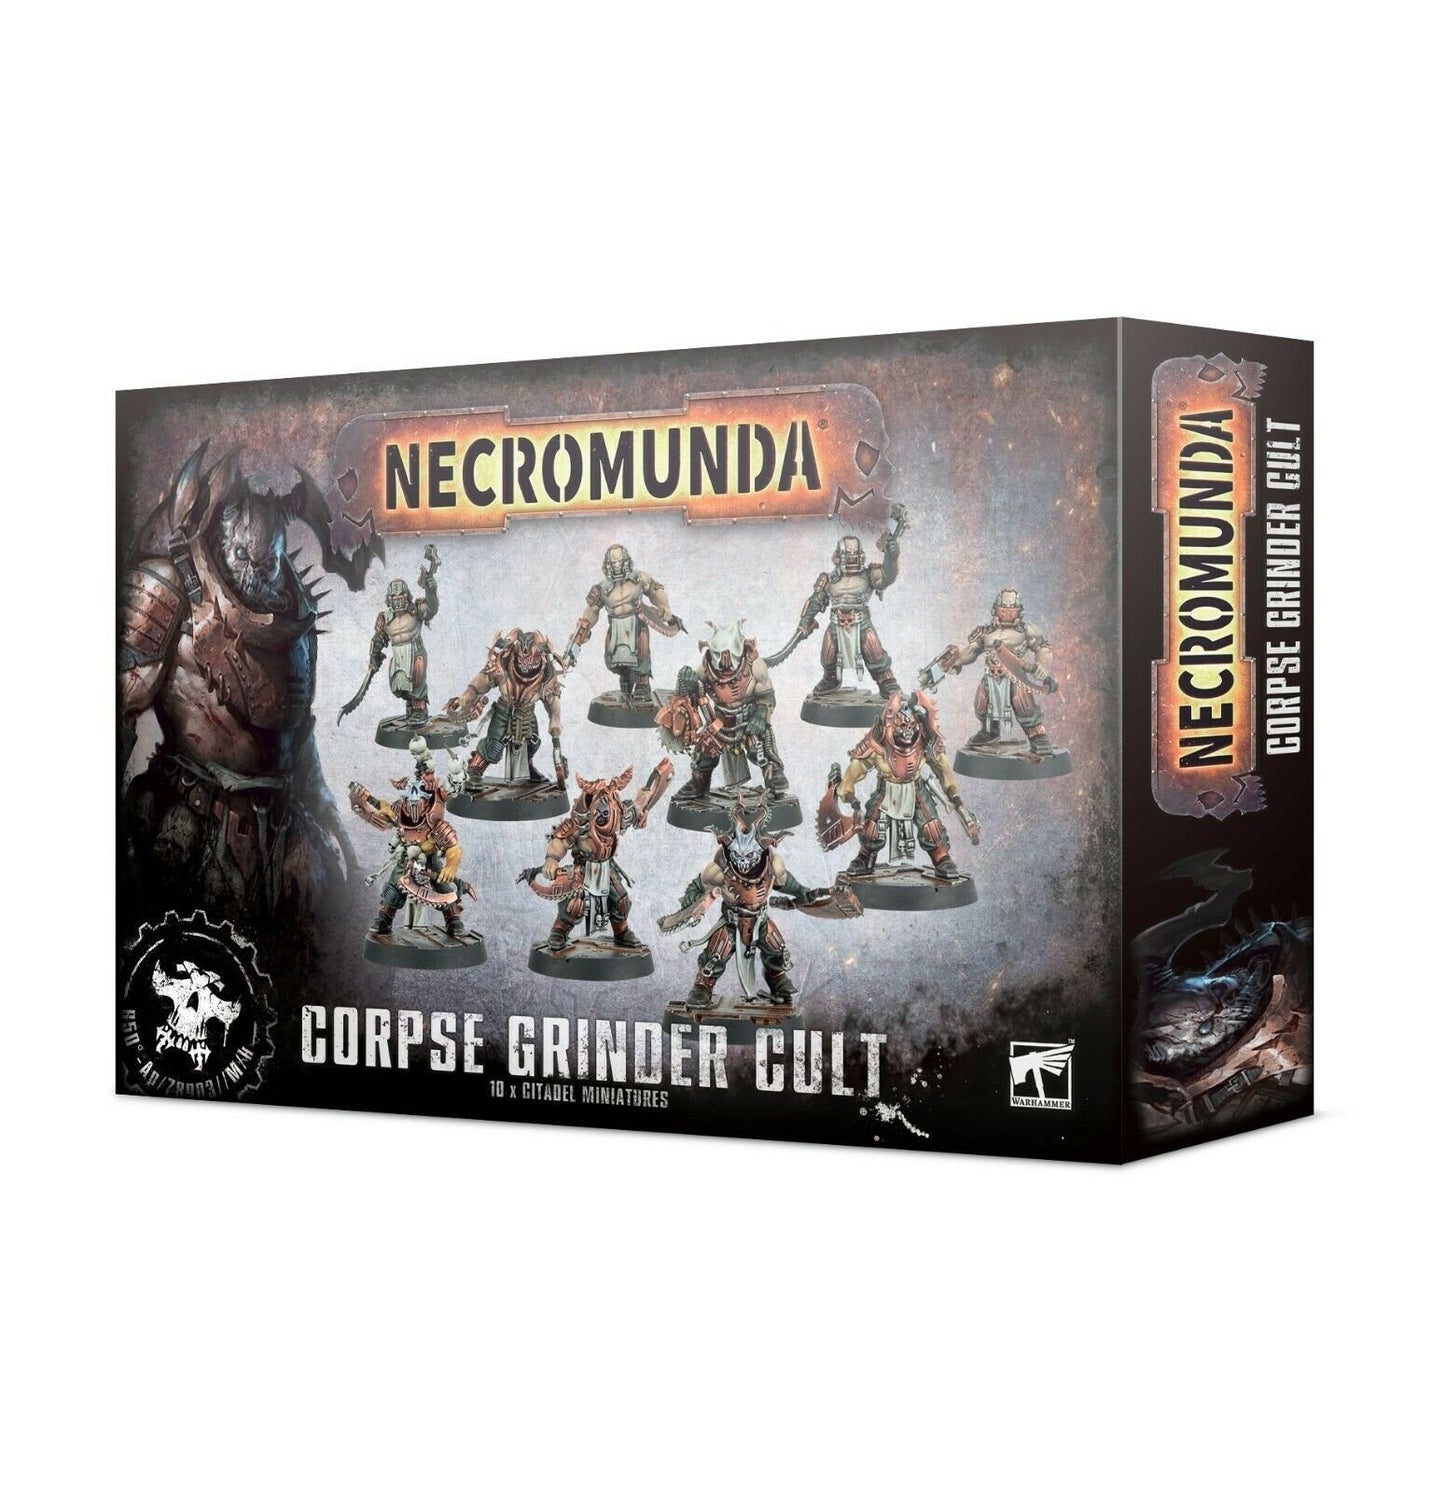 Discount Necromunda Corpse Grinder Cult - West Coast Games